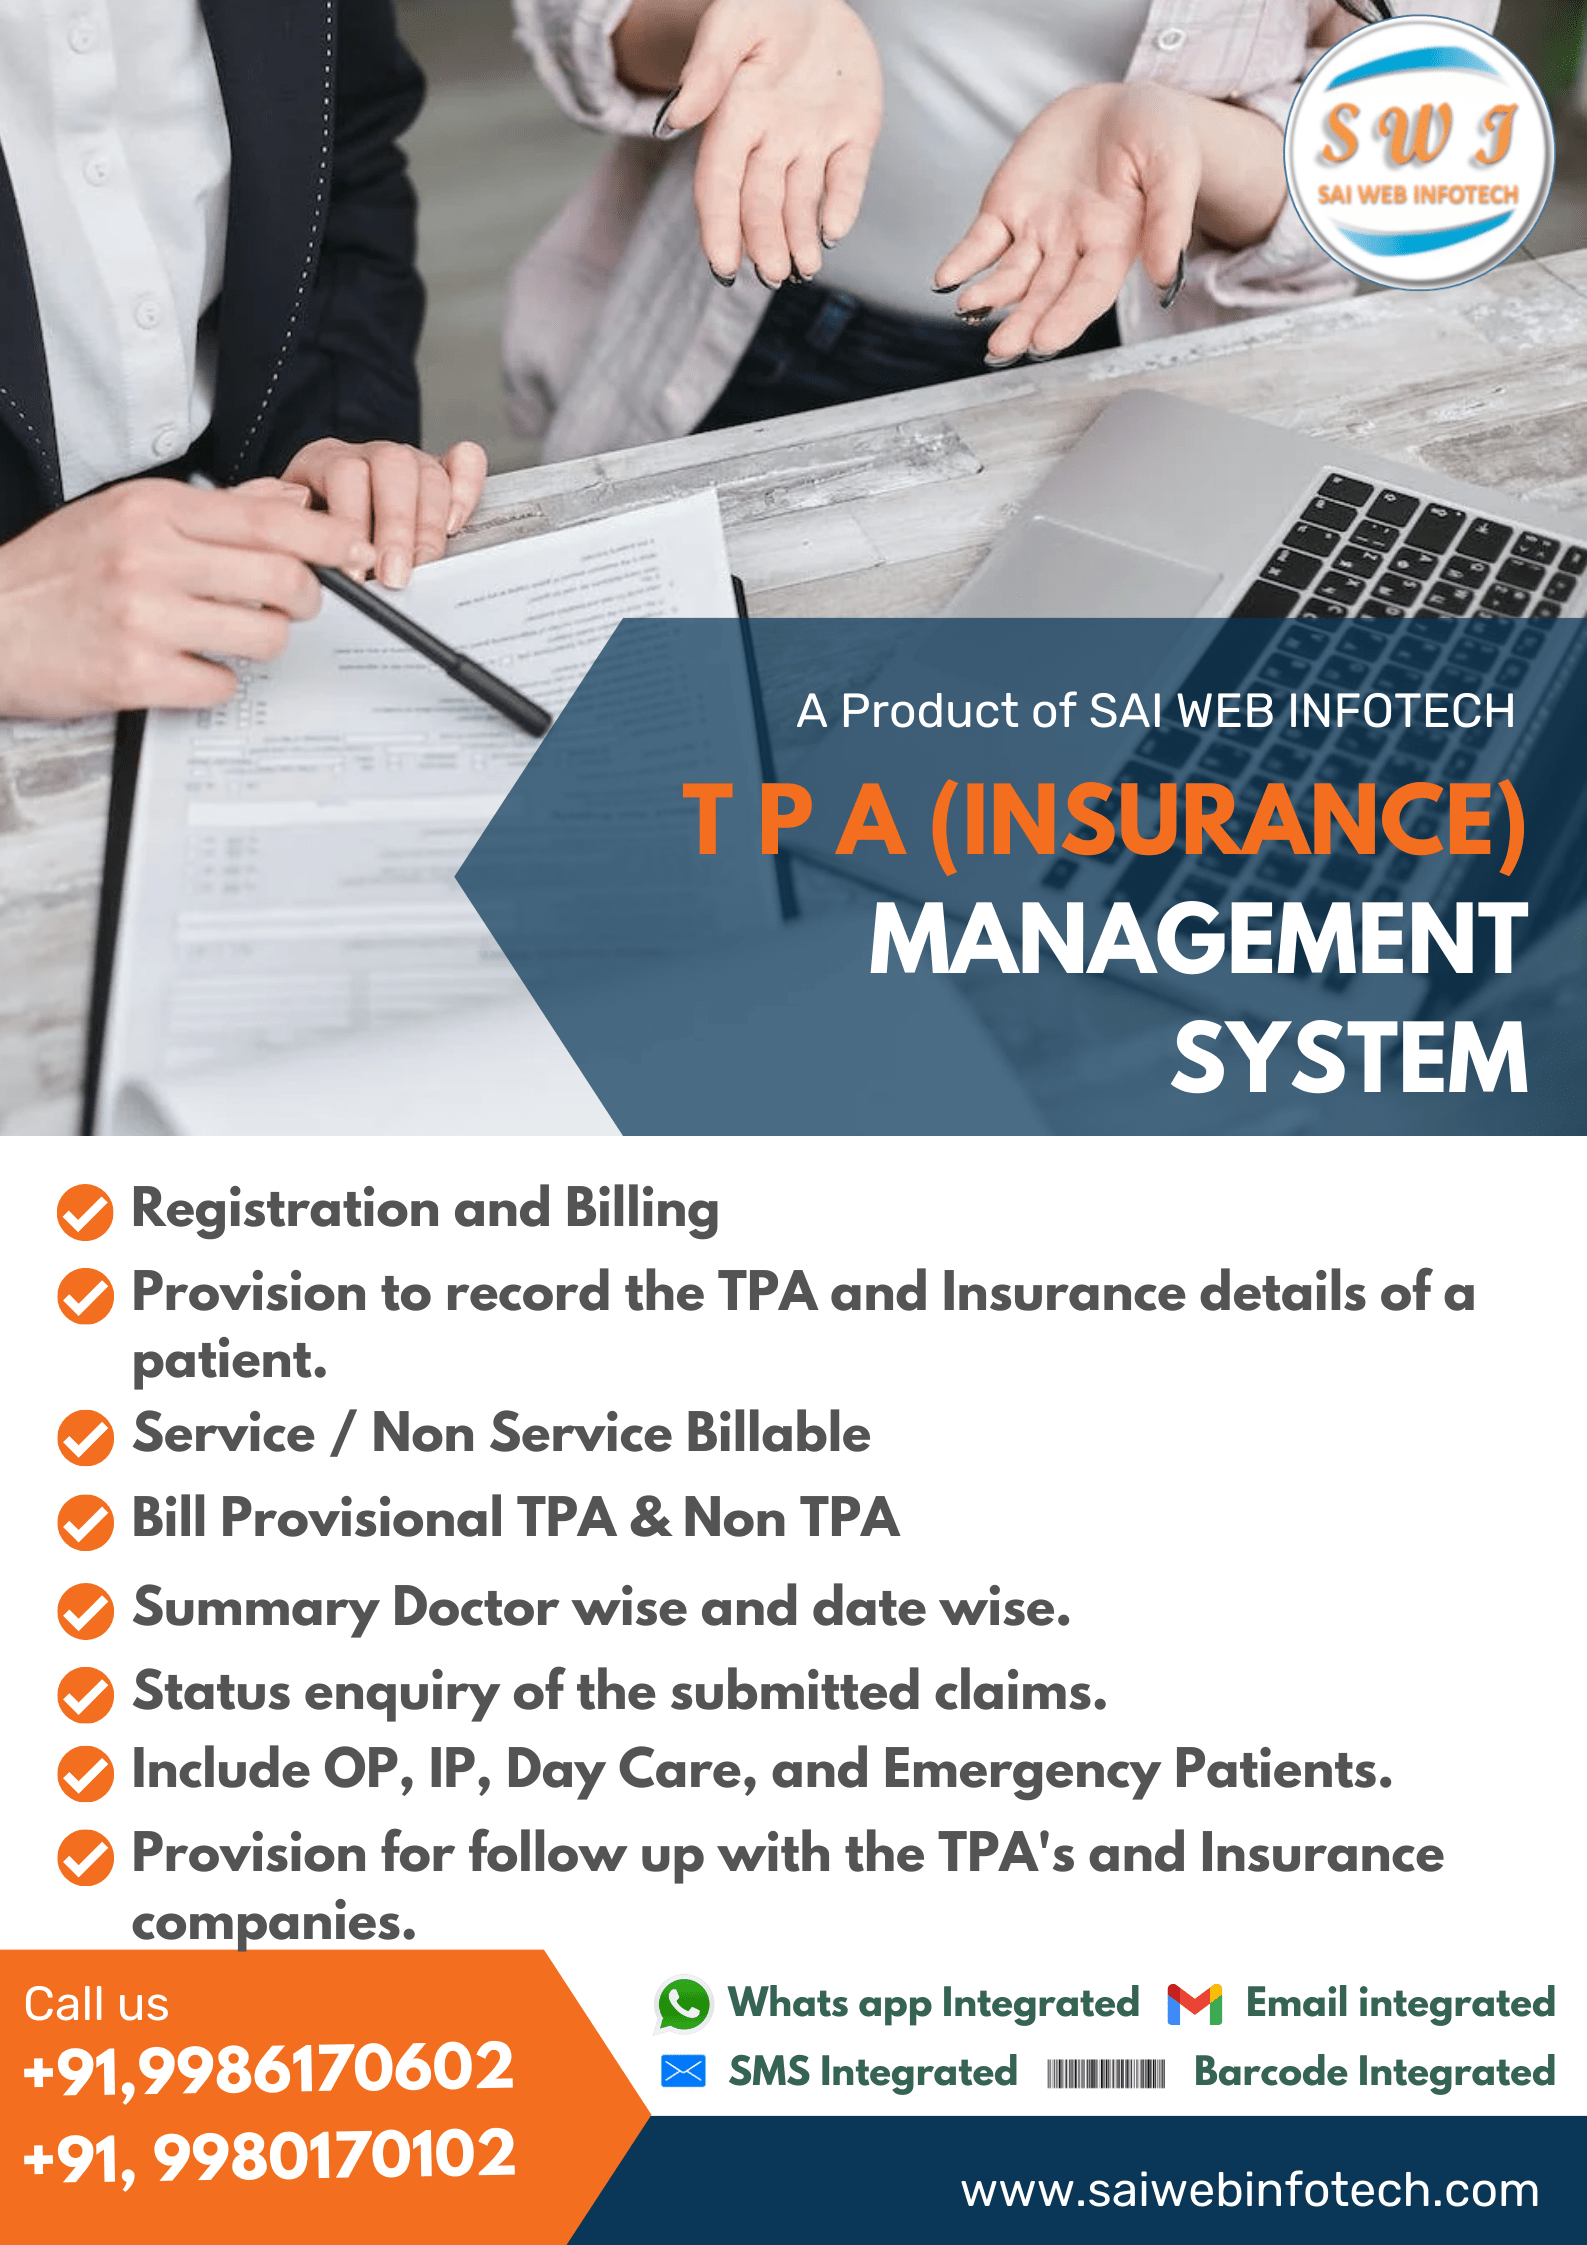 TPA Management System